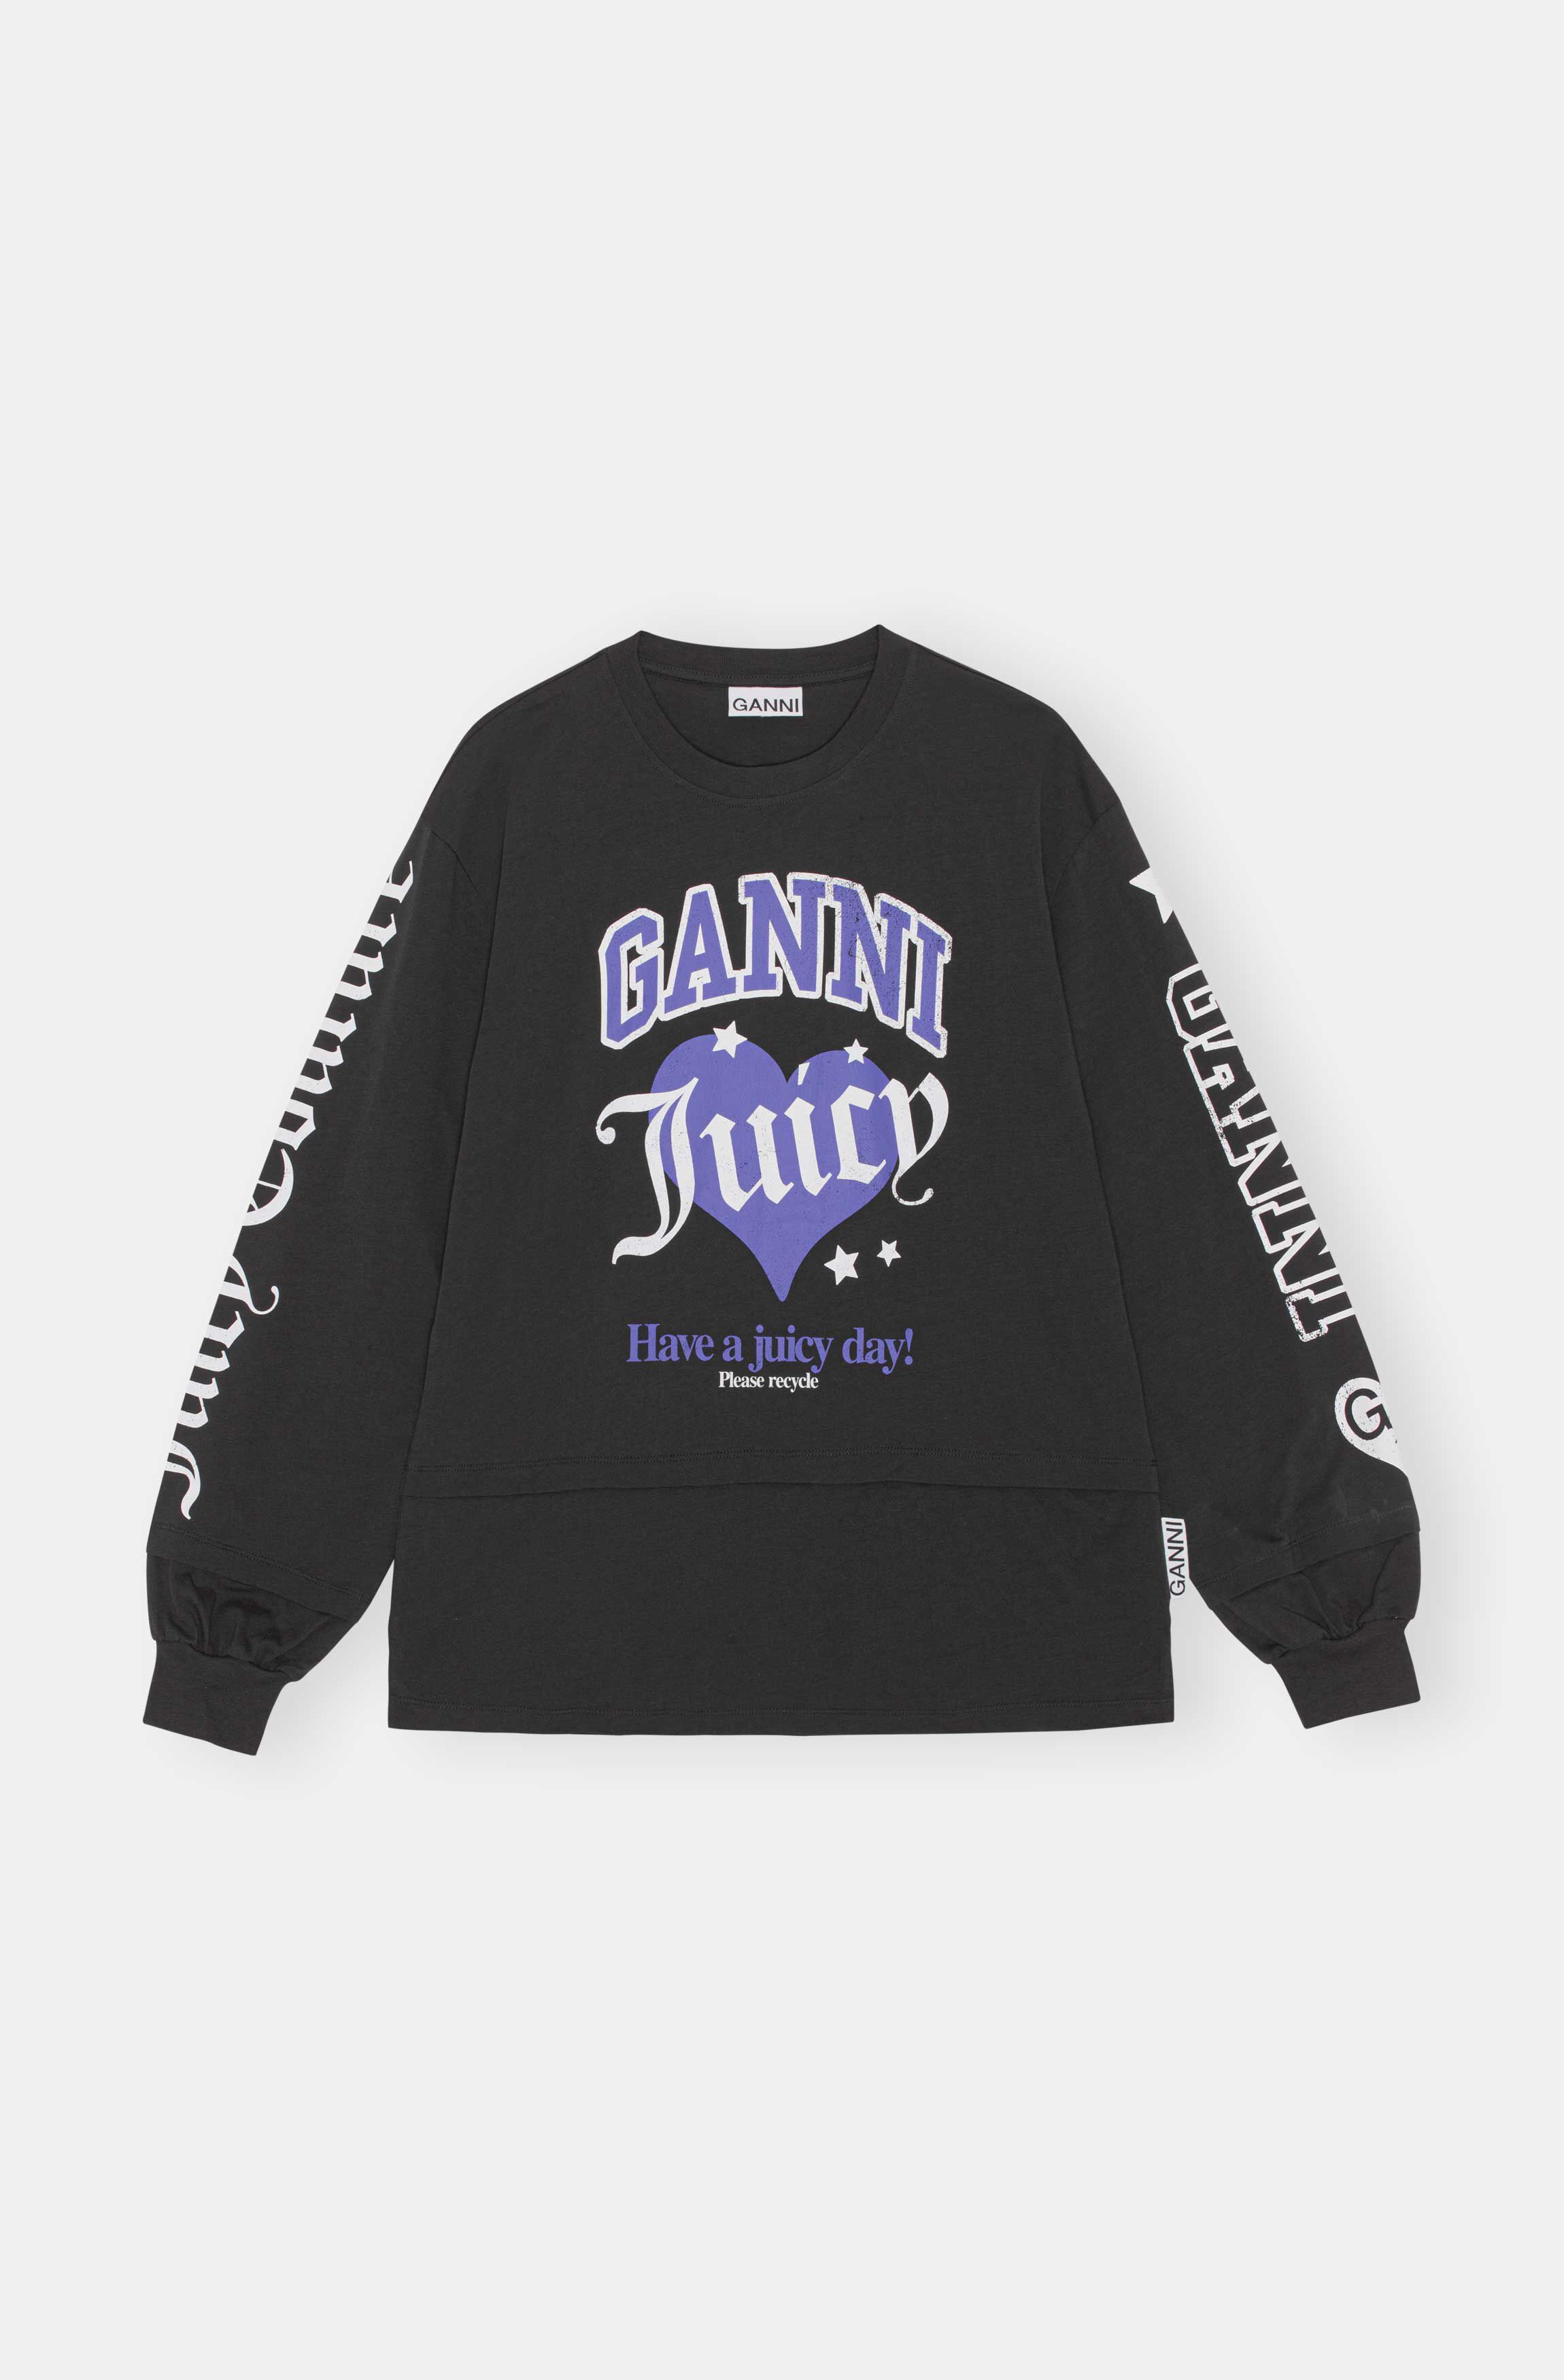 GANNI x Juicy Couture Collaboration | GANNI US | GANNI US